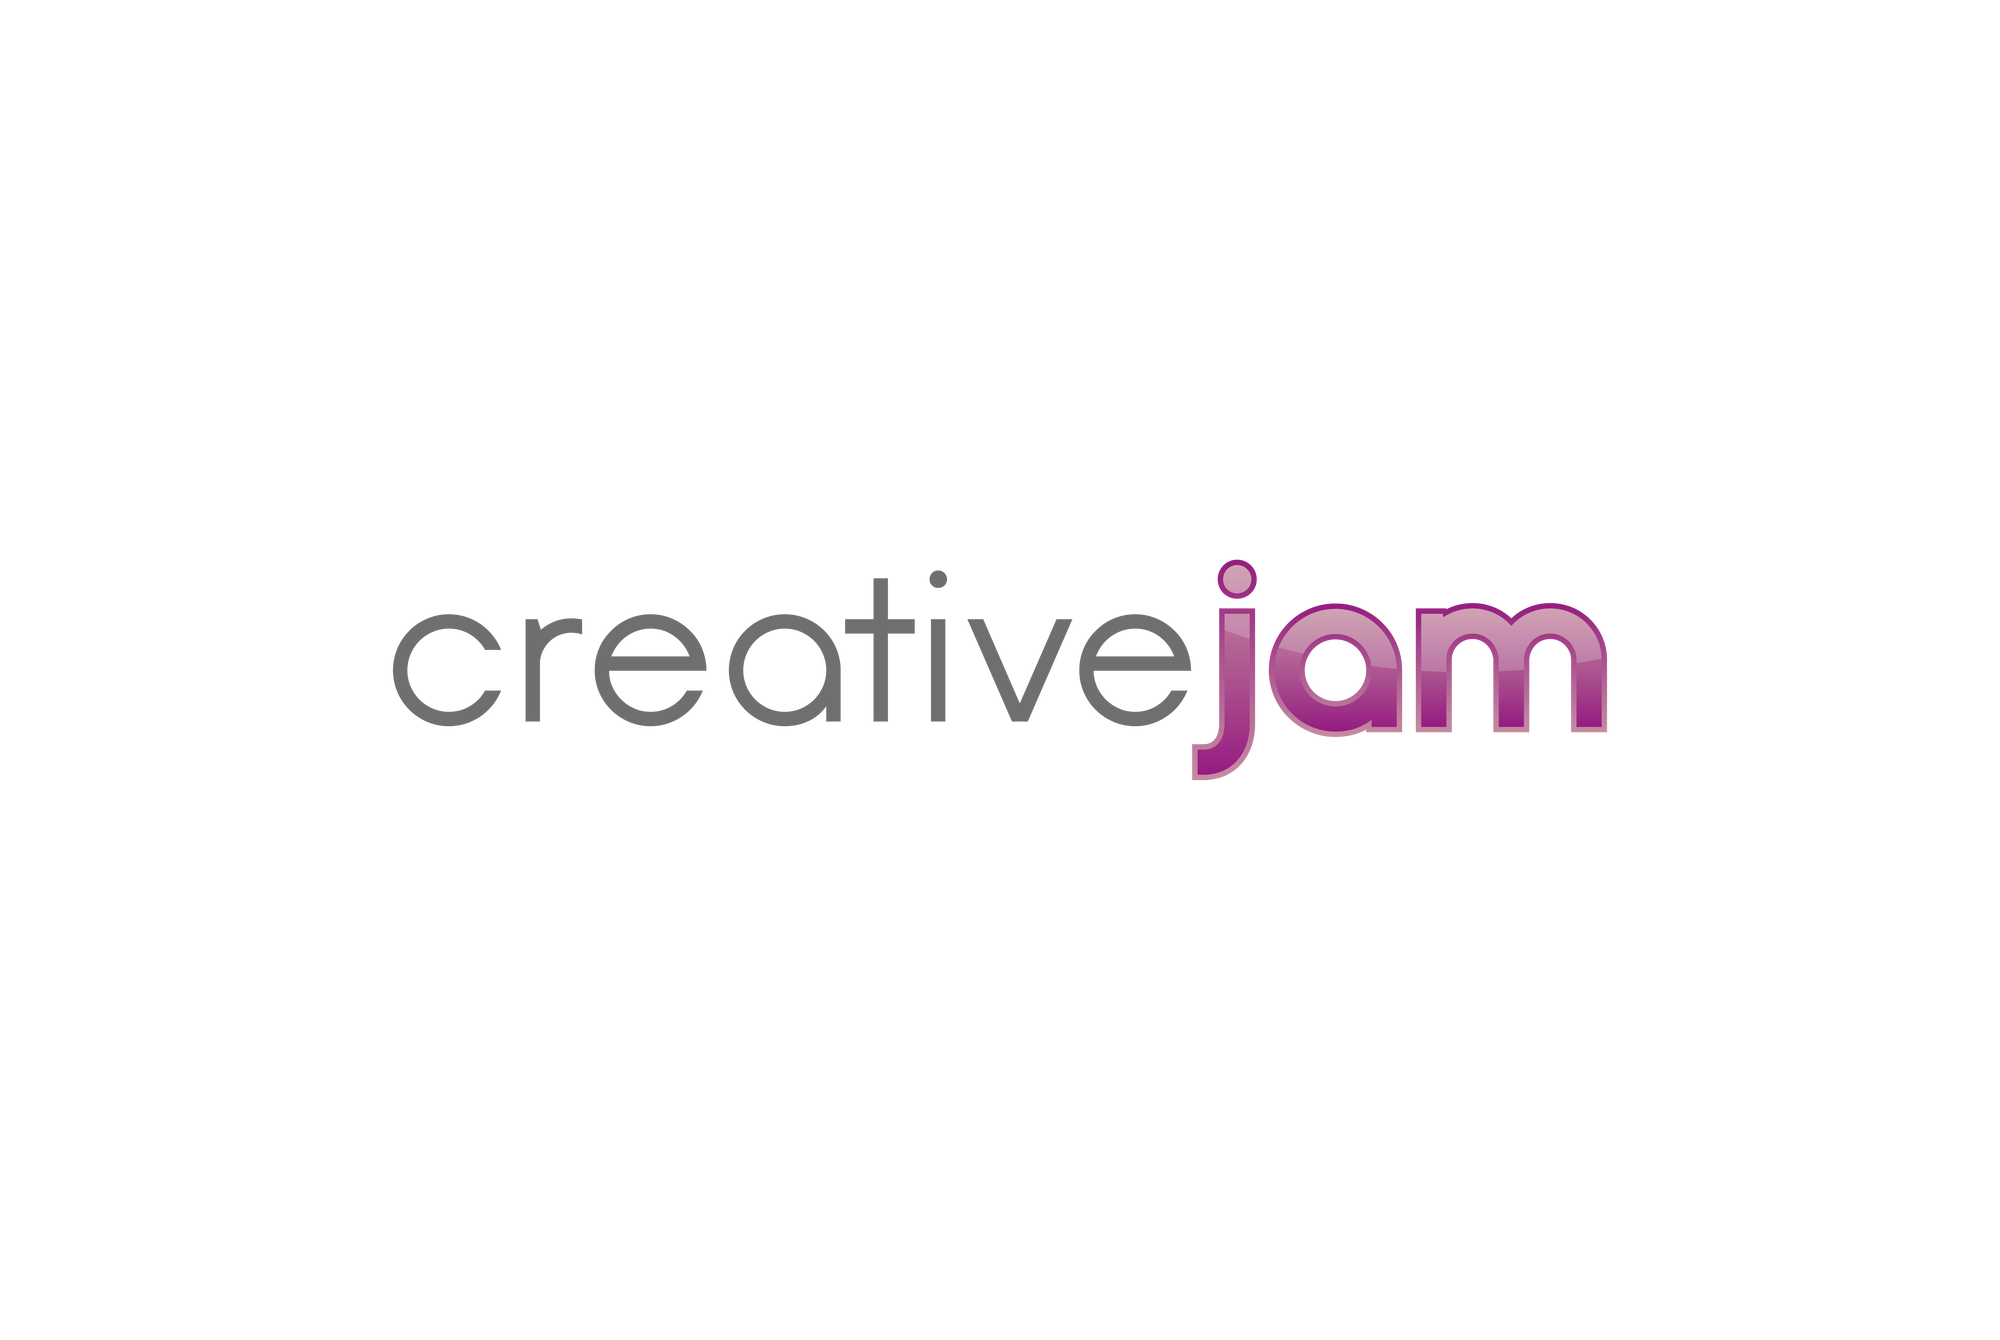 The Complete Creative Agency - Creative Jam